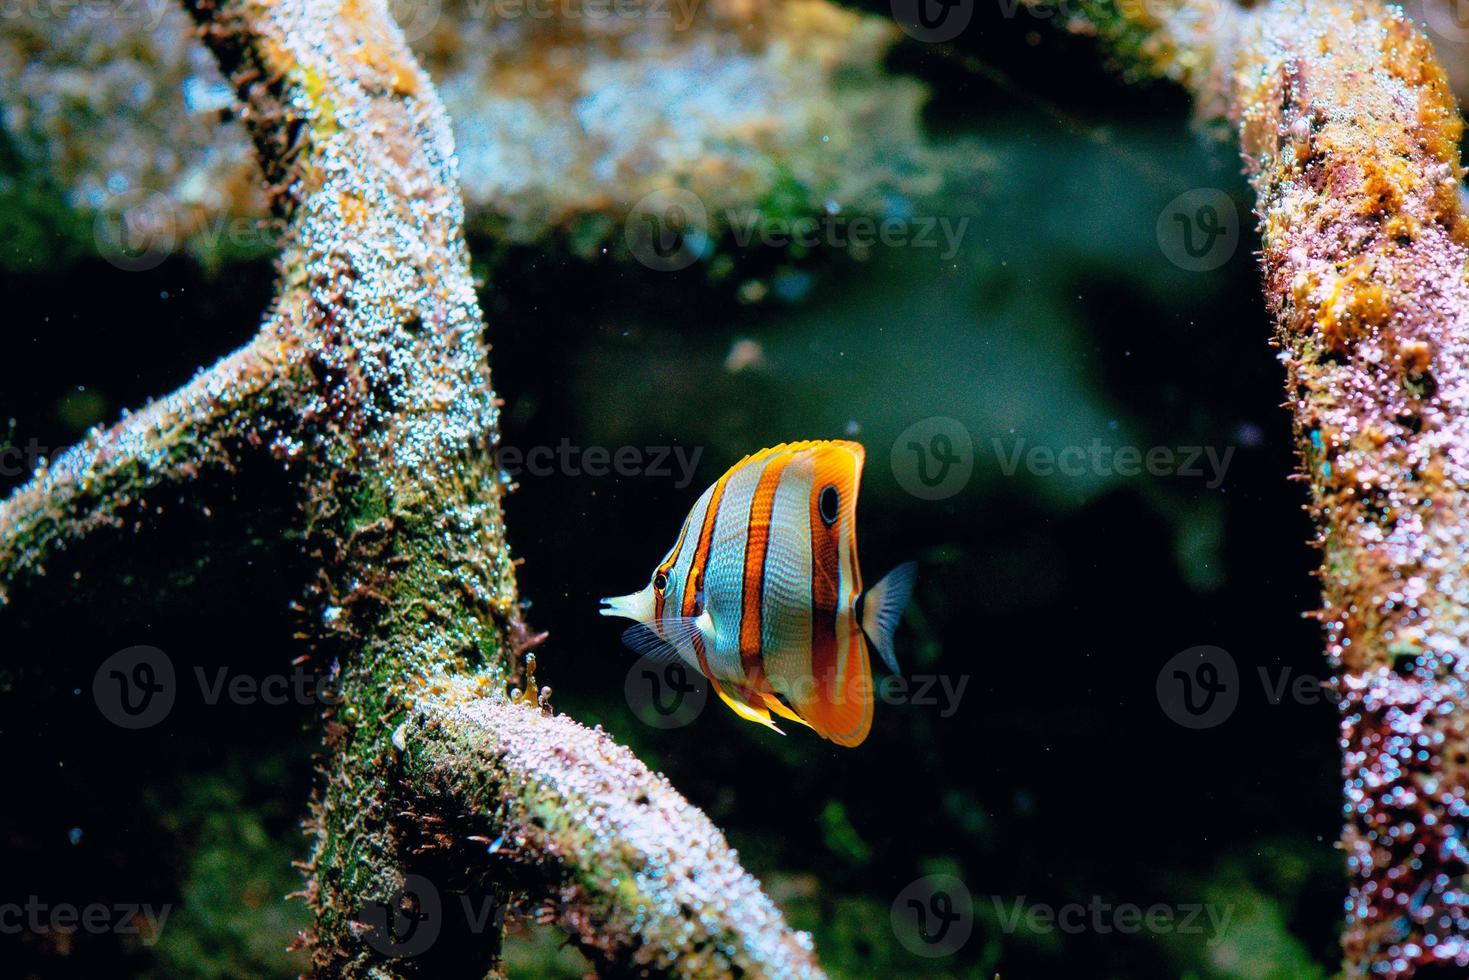 peixes tropicais coloridos e corais debaixo d'água no aquário foto